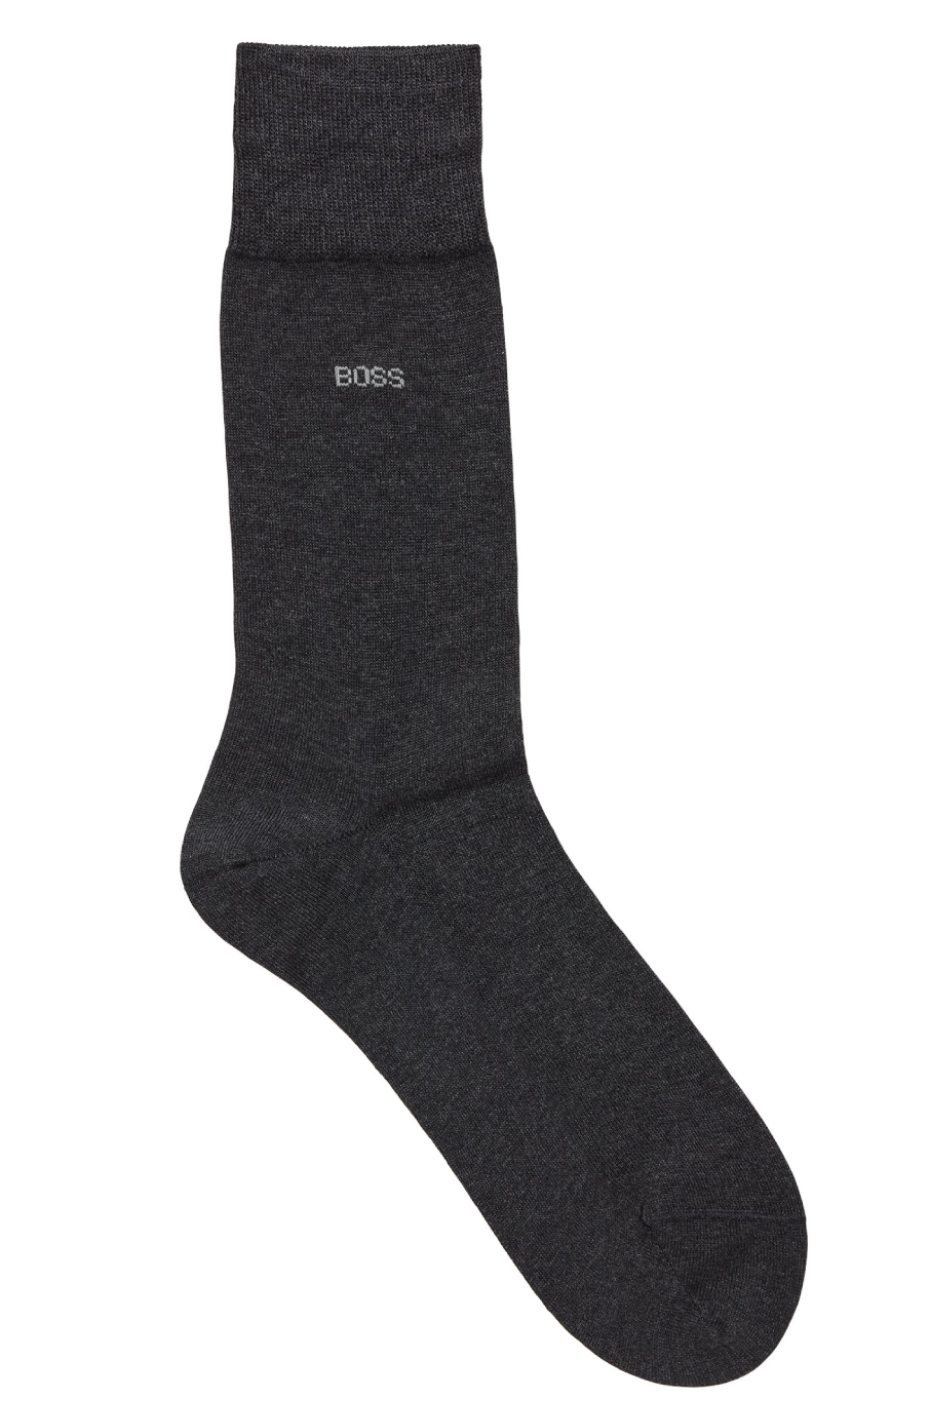 BOSS George Men's Socks